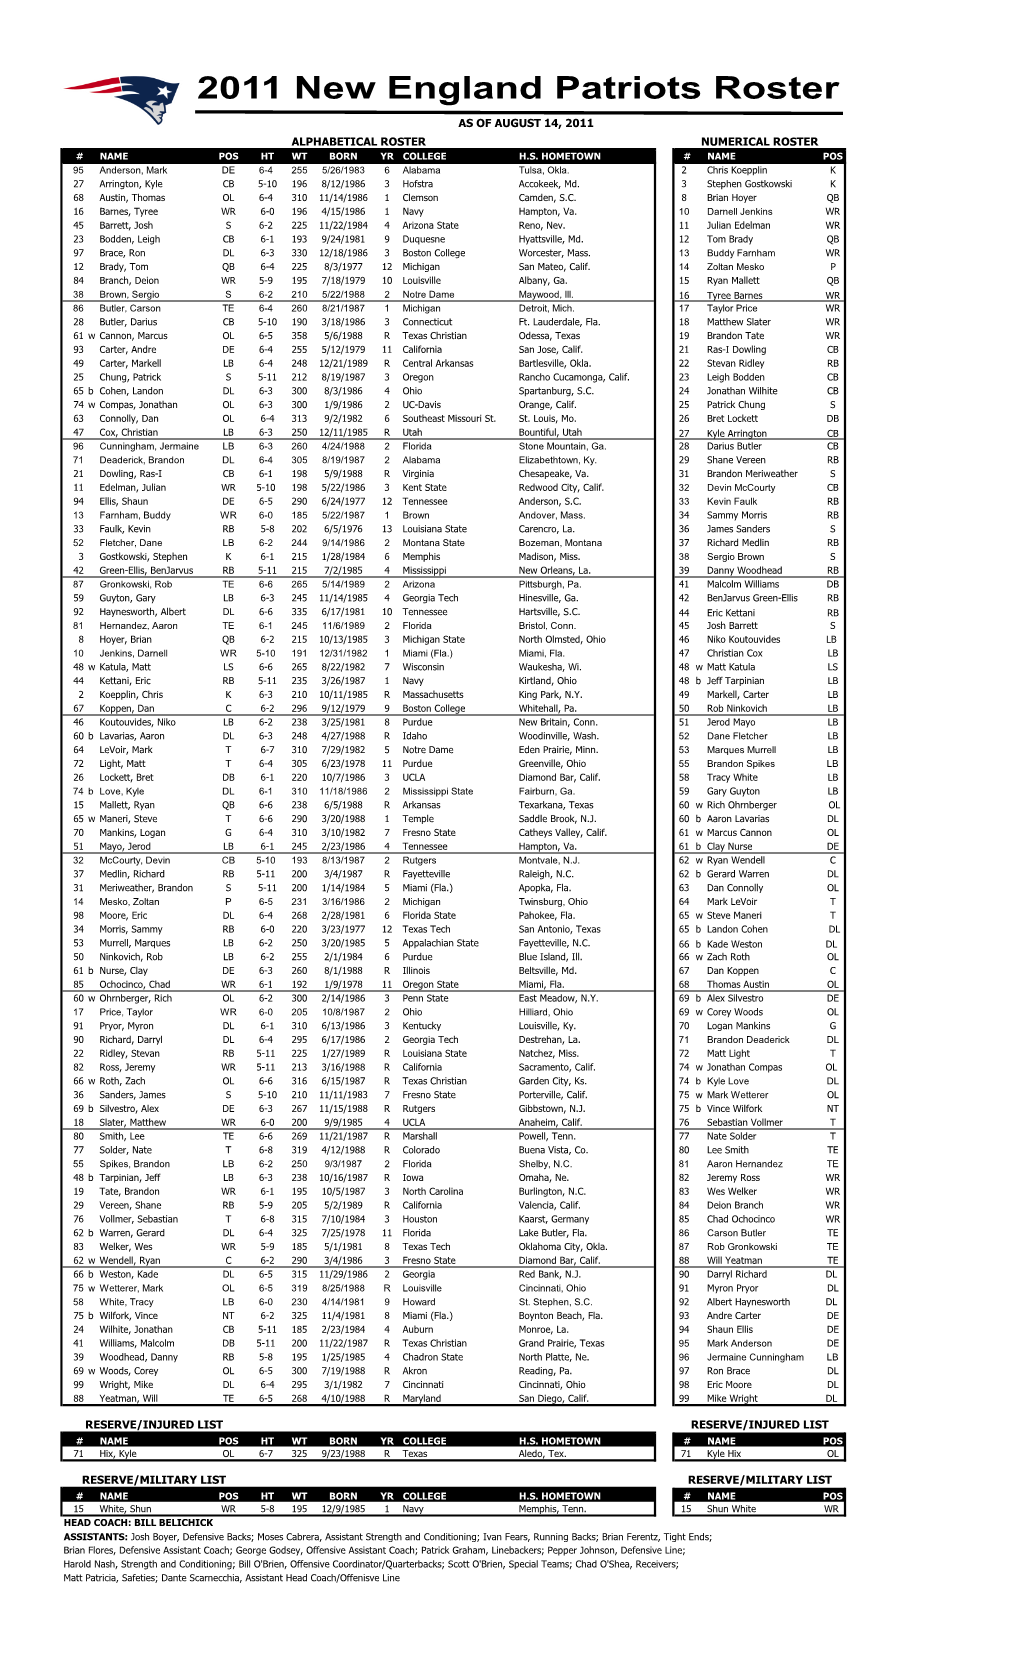 Reserve/Injured List Reserve/Military List